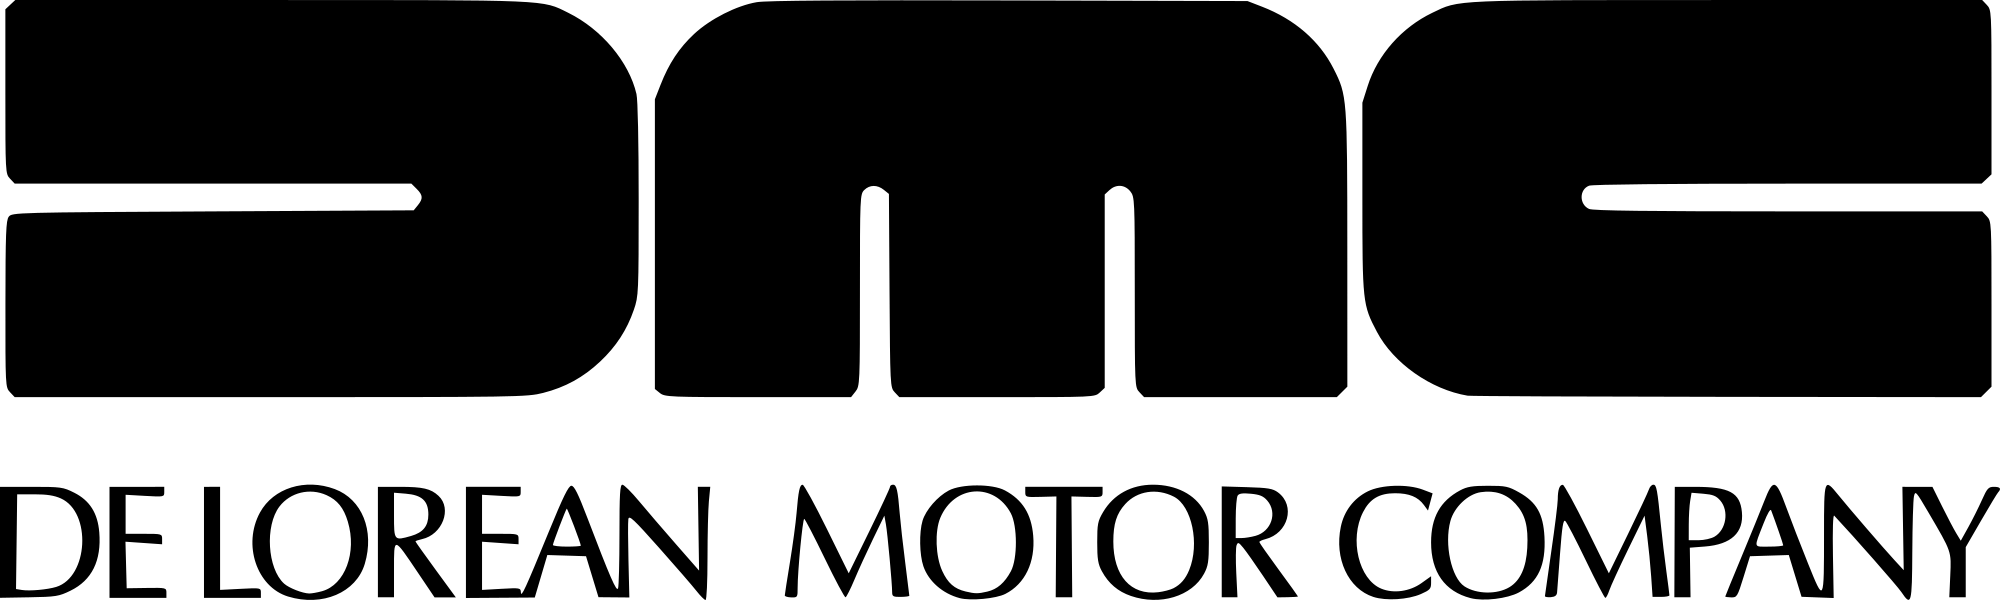 DeLorean Logo - DeLorean Motor Company logo.svg